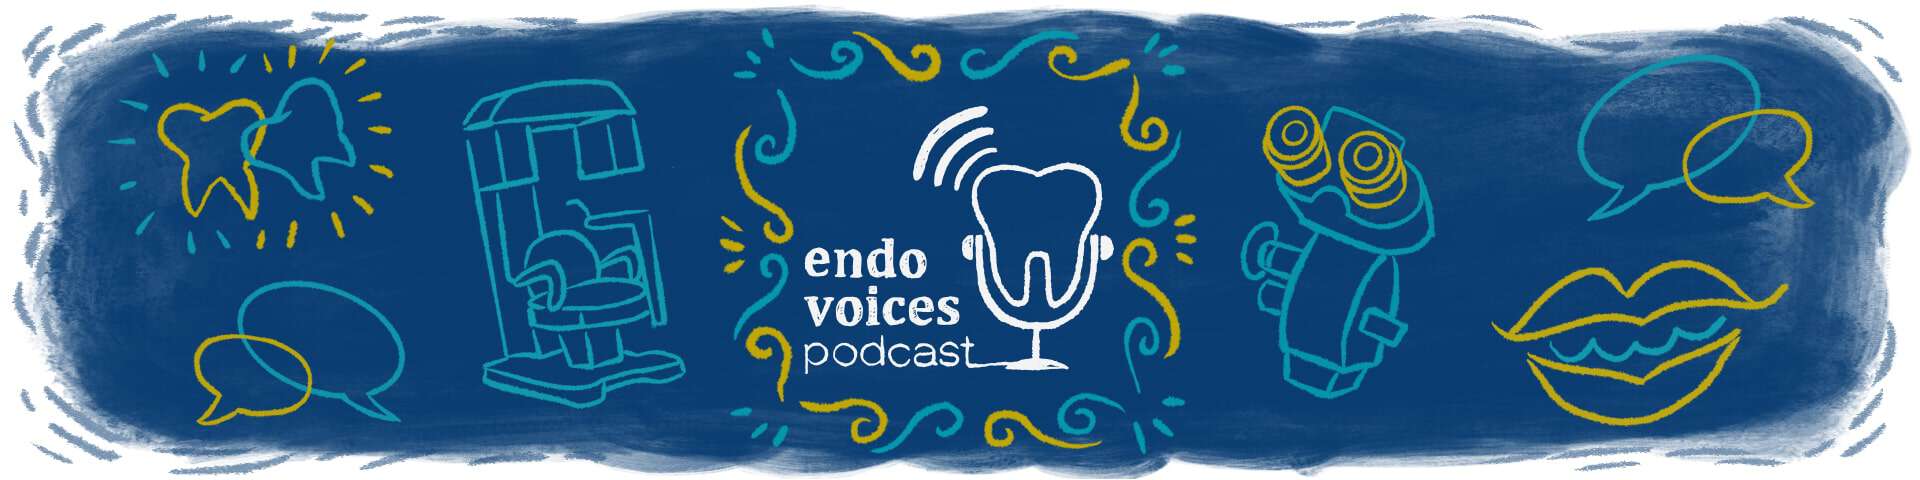 endo-voices-podcast